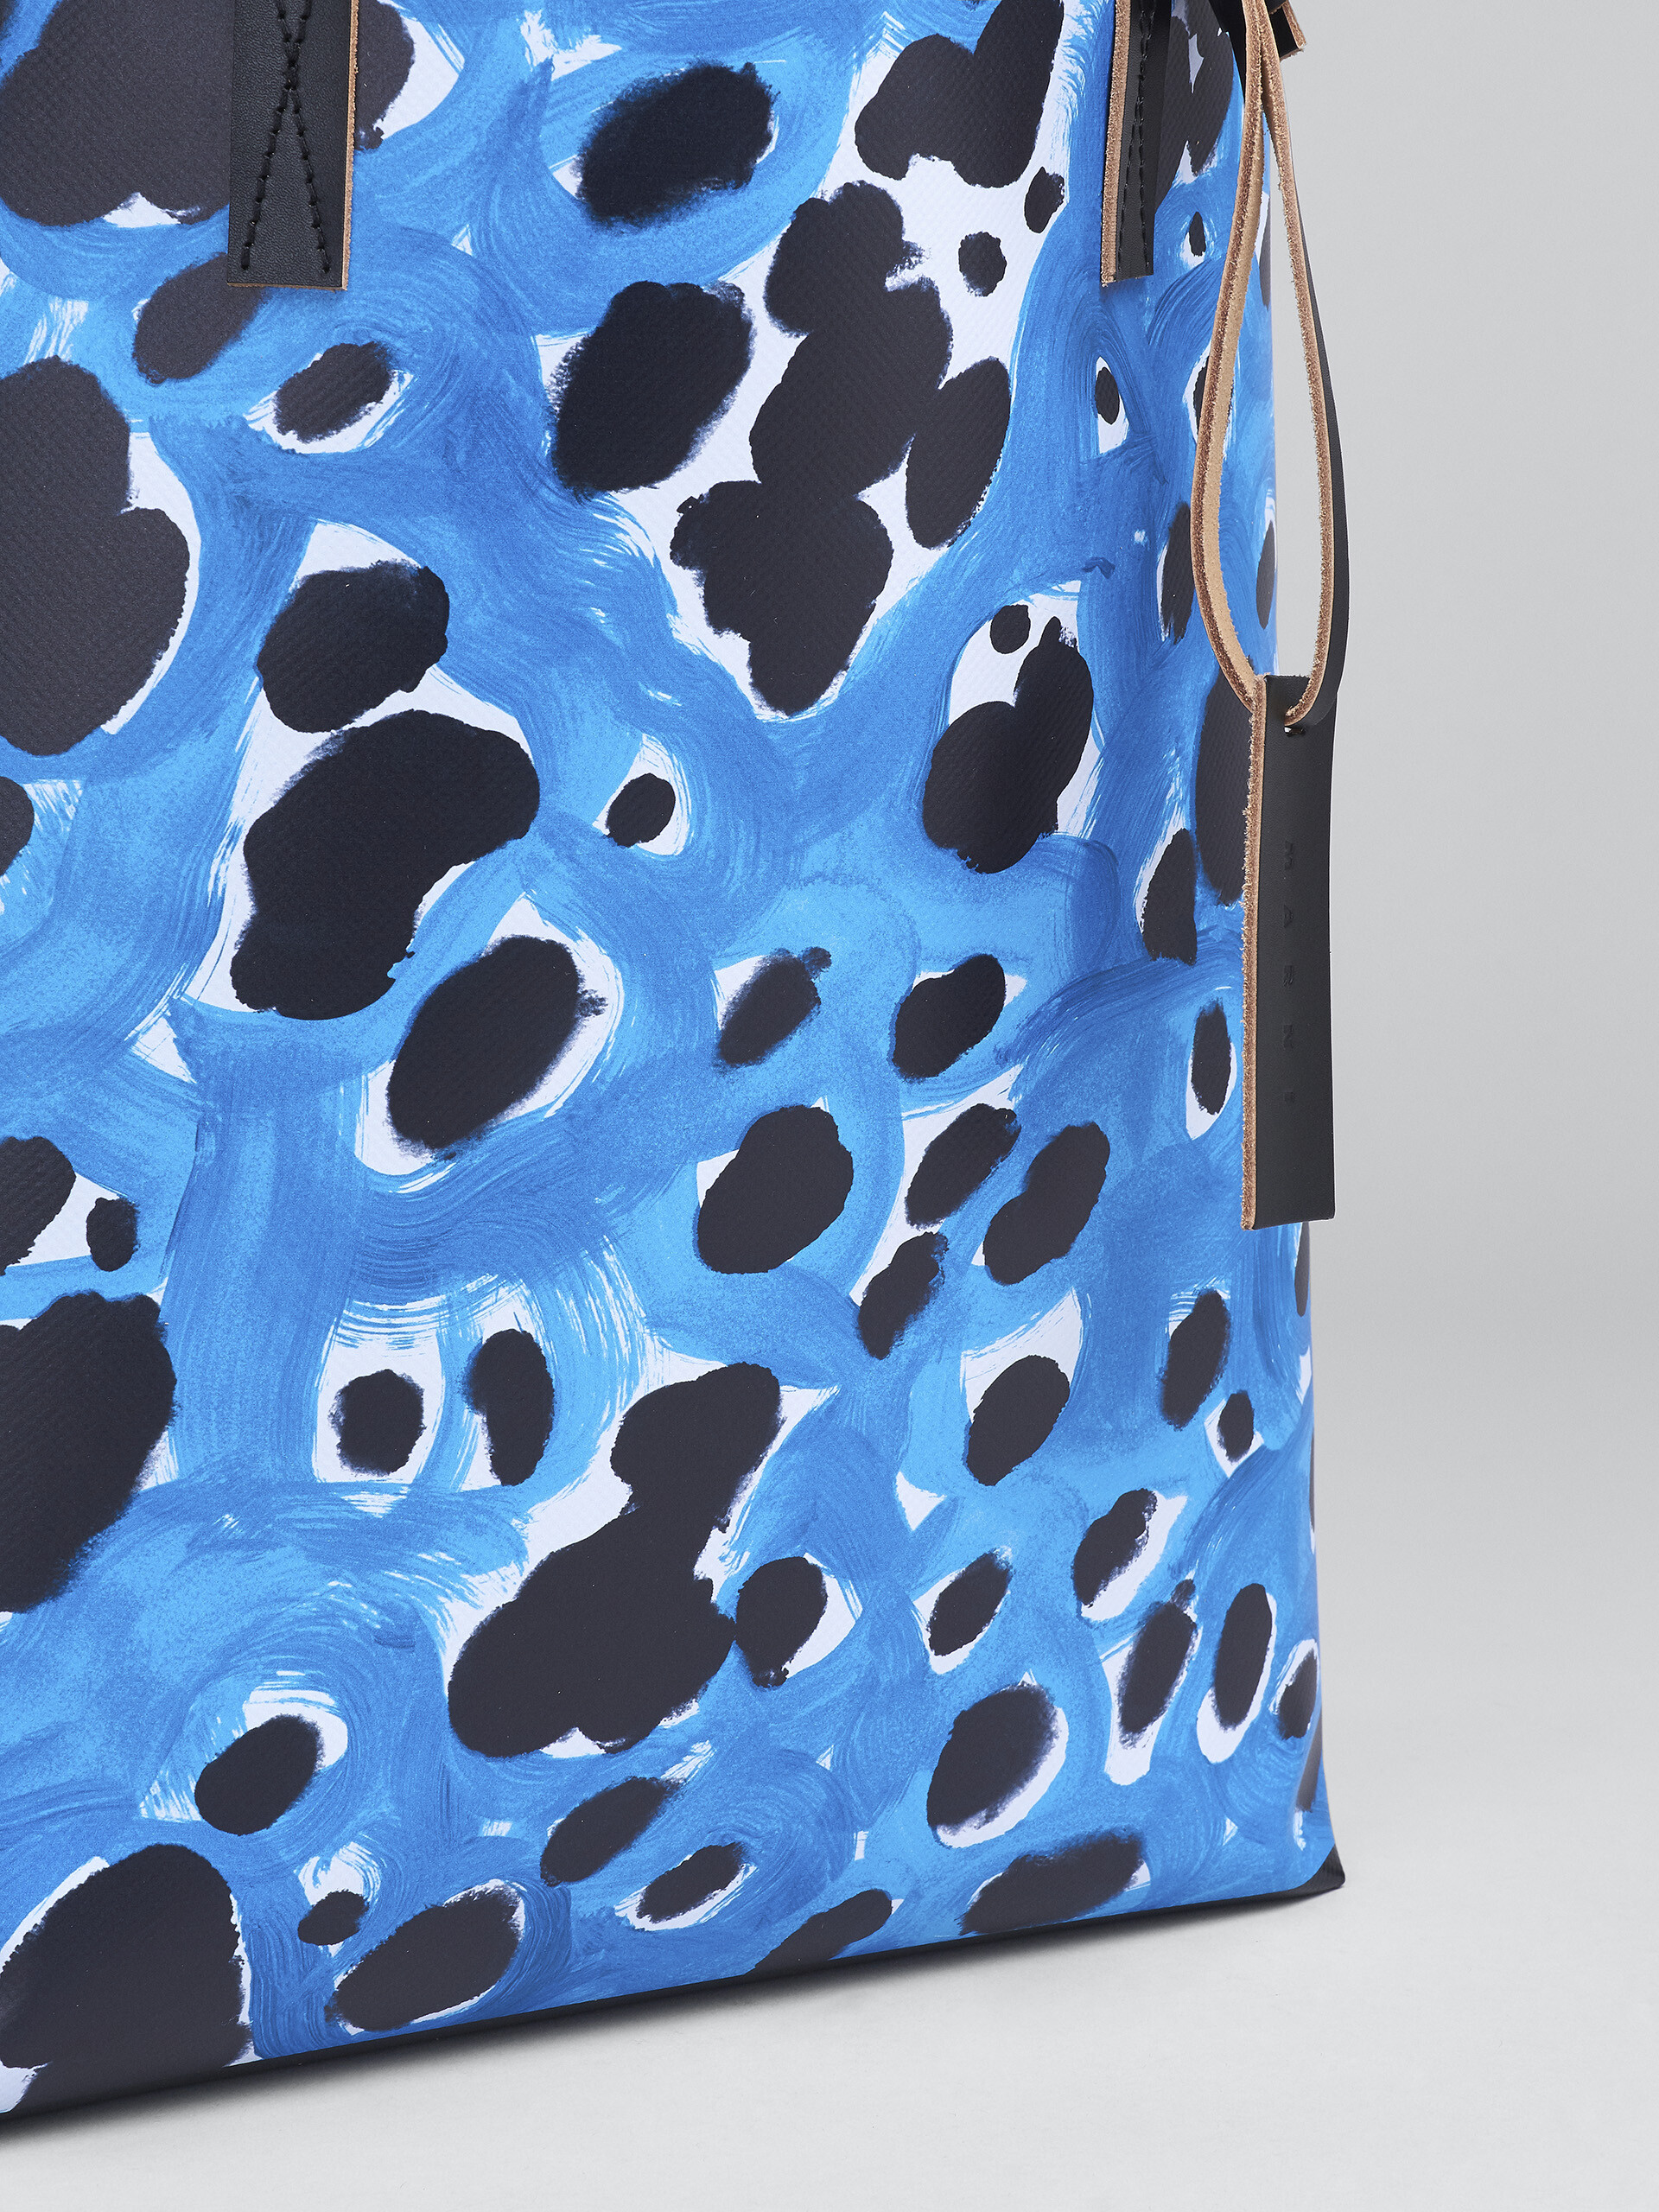 Blue Pop Dots print TRIBECA shopping bag - Shopping Bags - Image 5